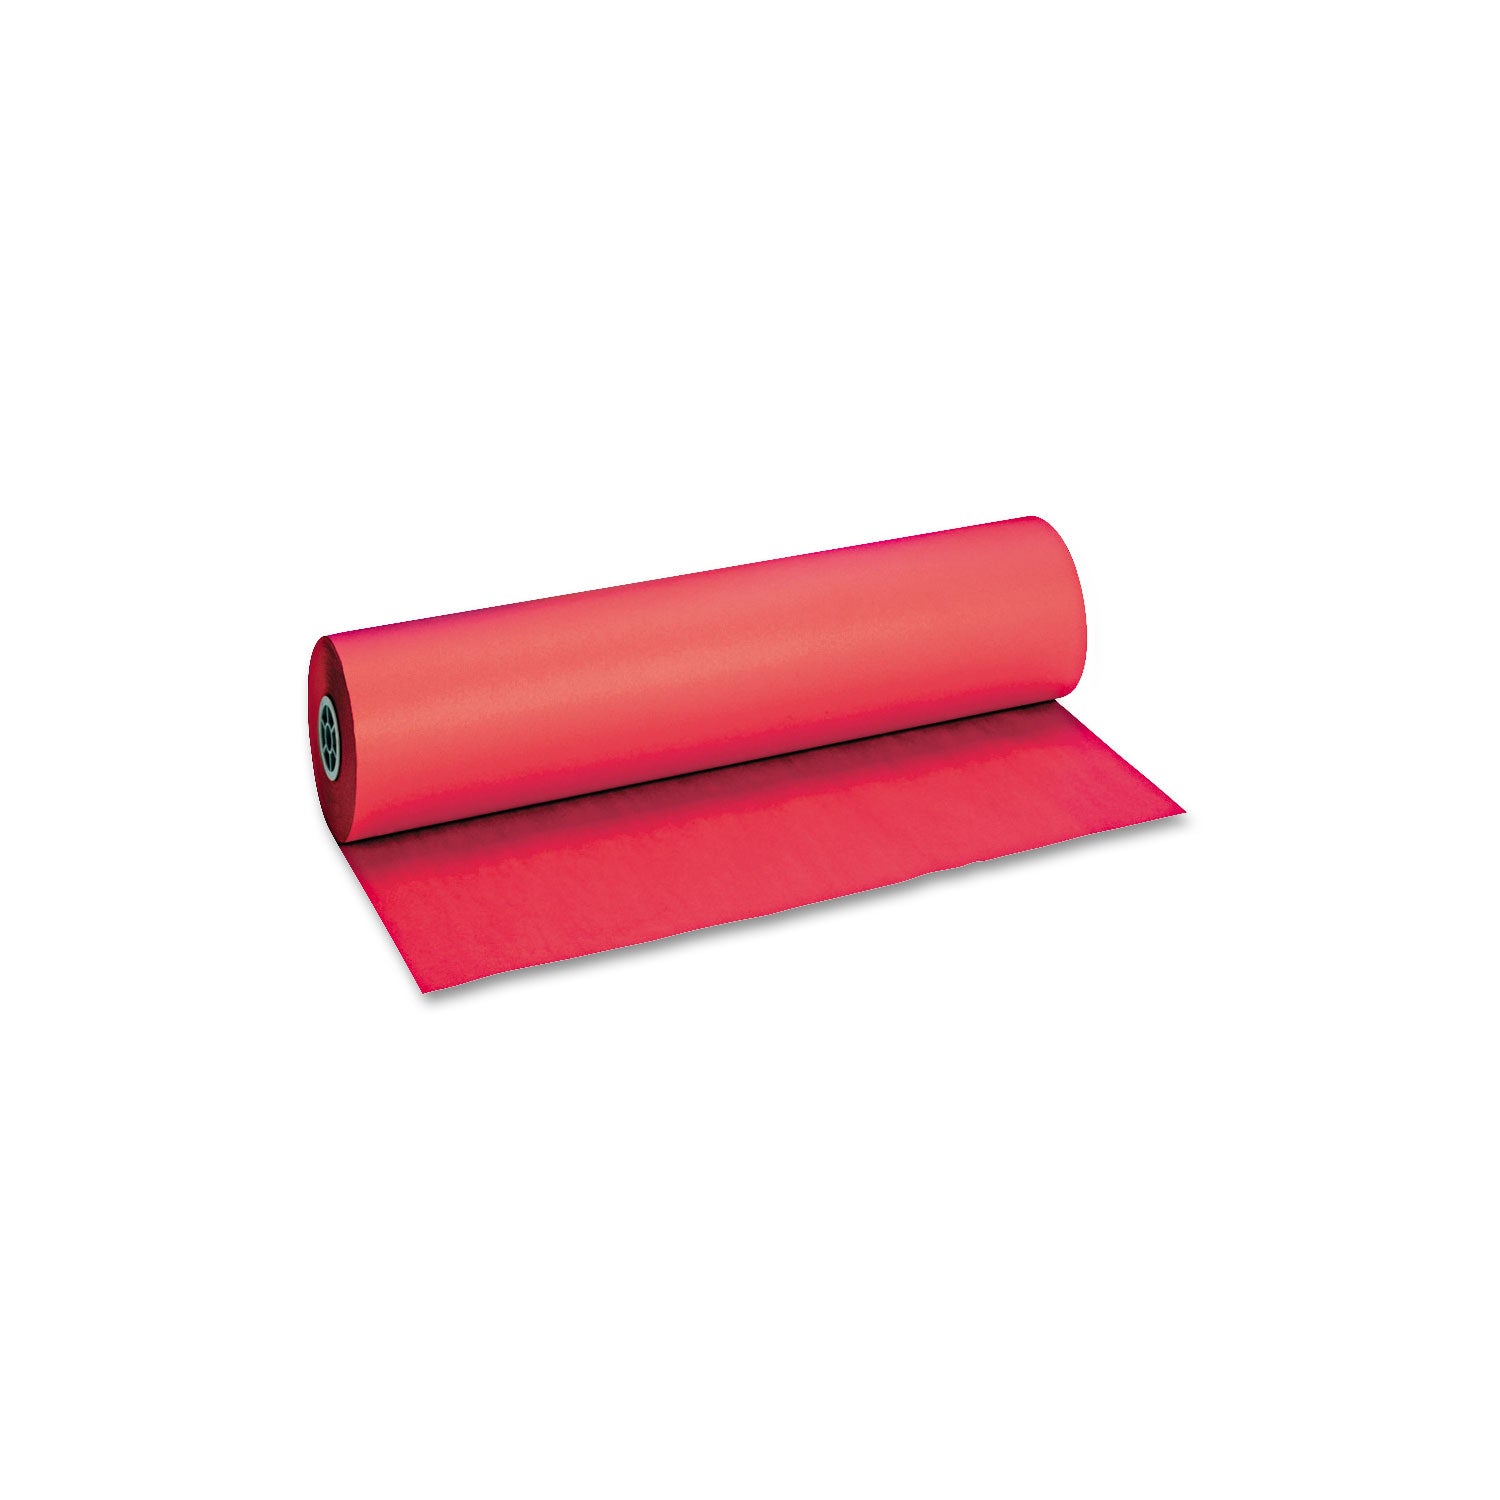 Decorol Flame Retardant Art Rolls, 40 lb Cover Weight, 36" x 1000 ft, Cherry Red - 